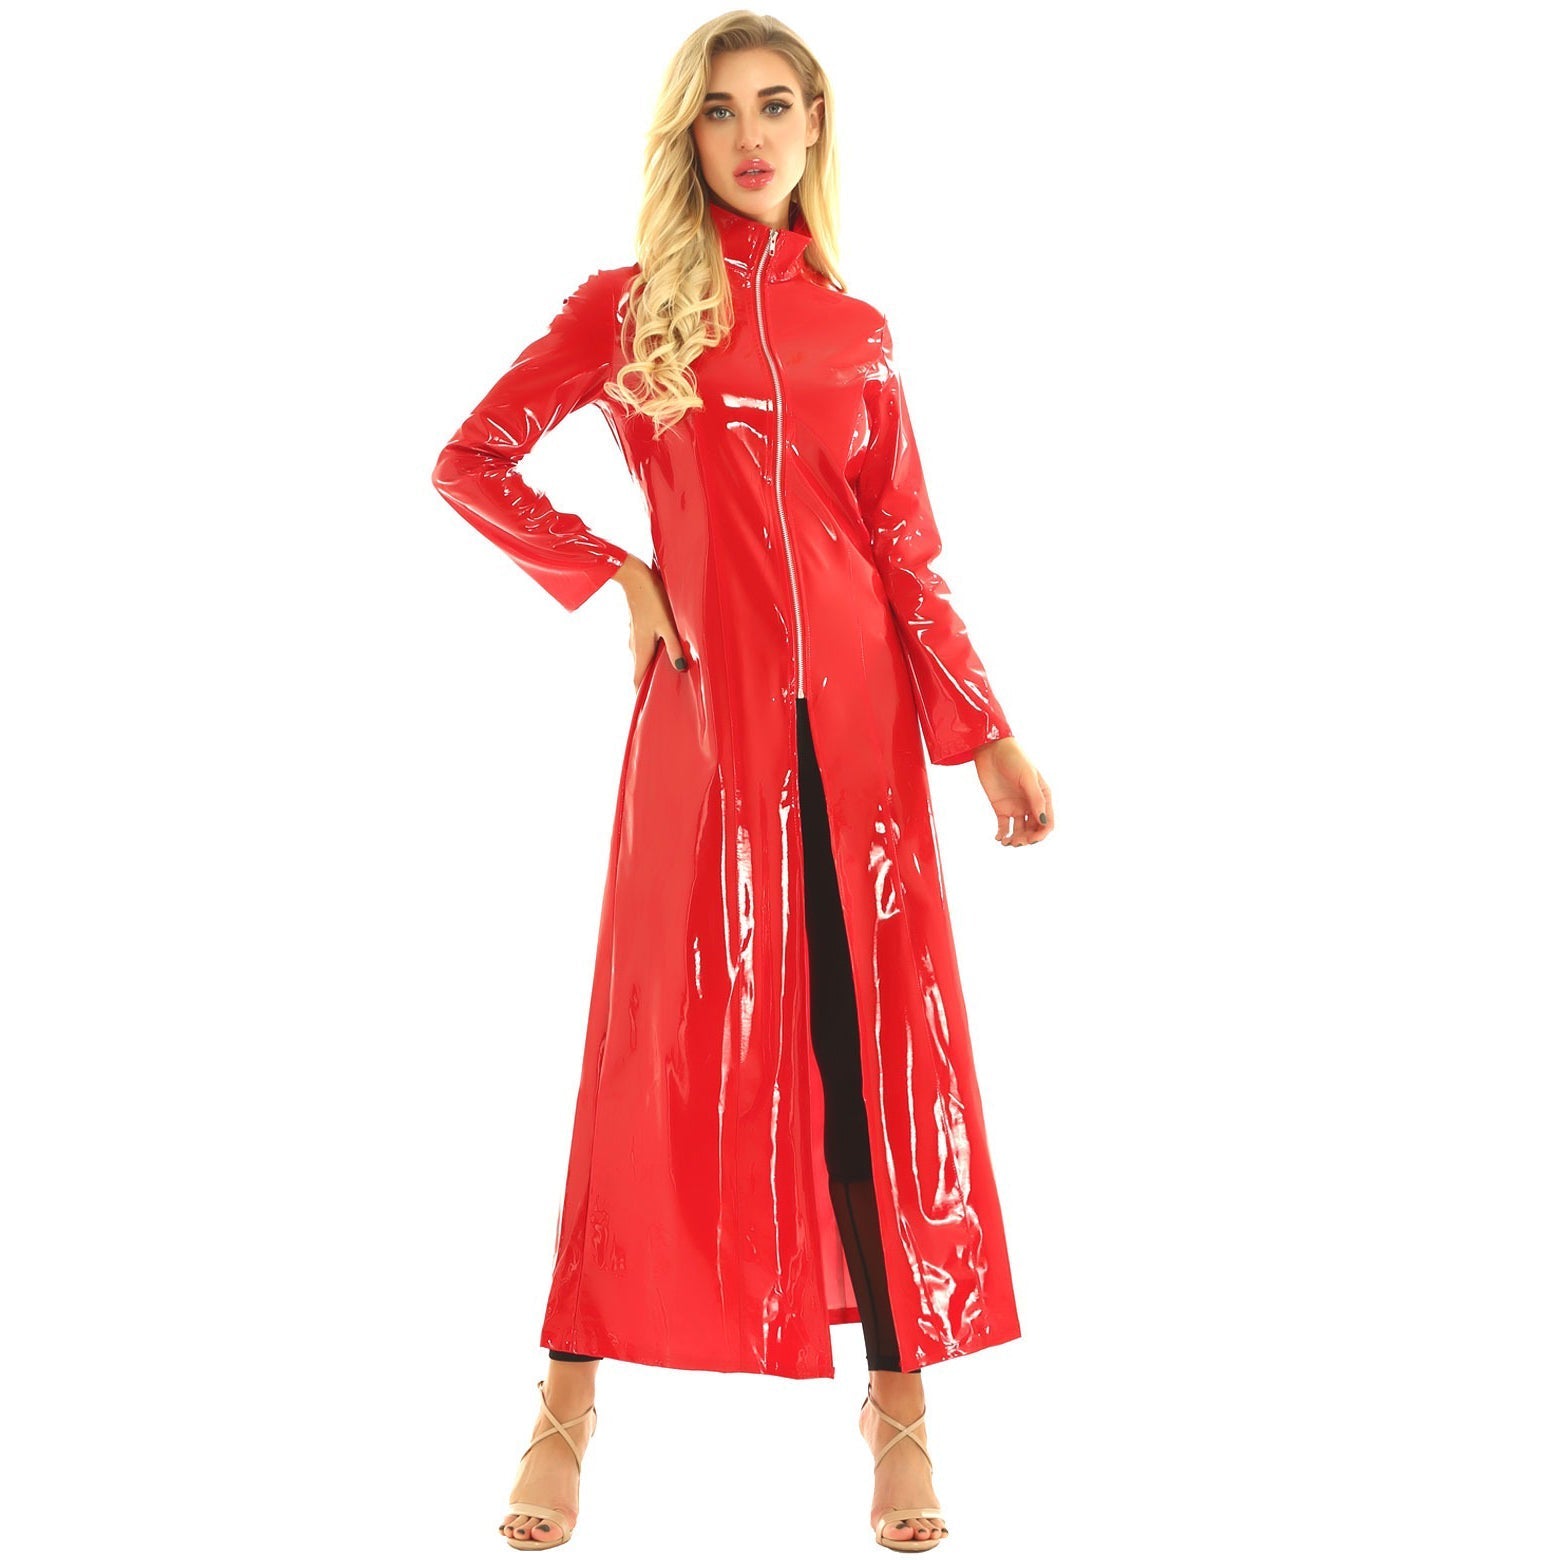 Women Sexy PVC Leather Wetlook Long Sleeve Coat in Gothic Style - HARD'N'HEAVY